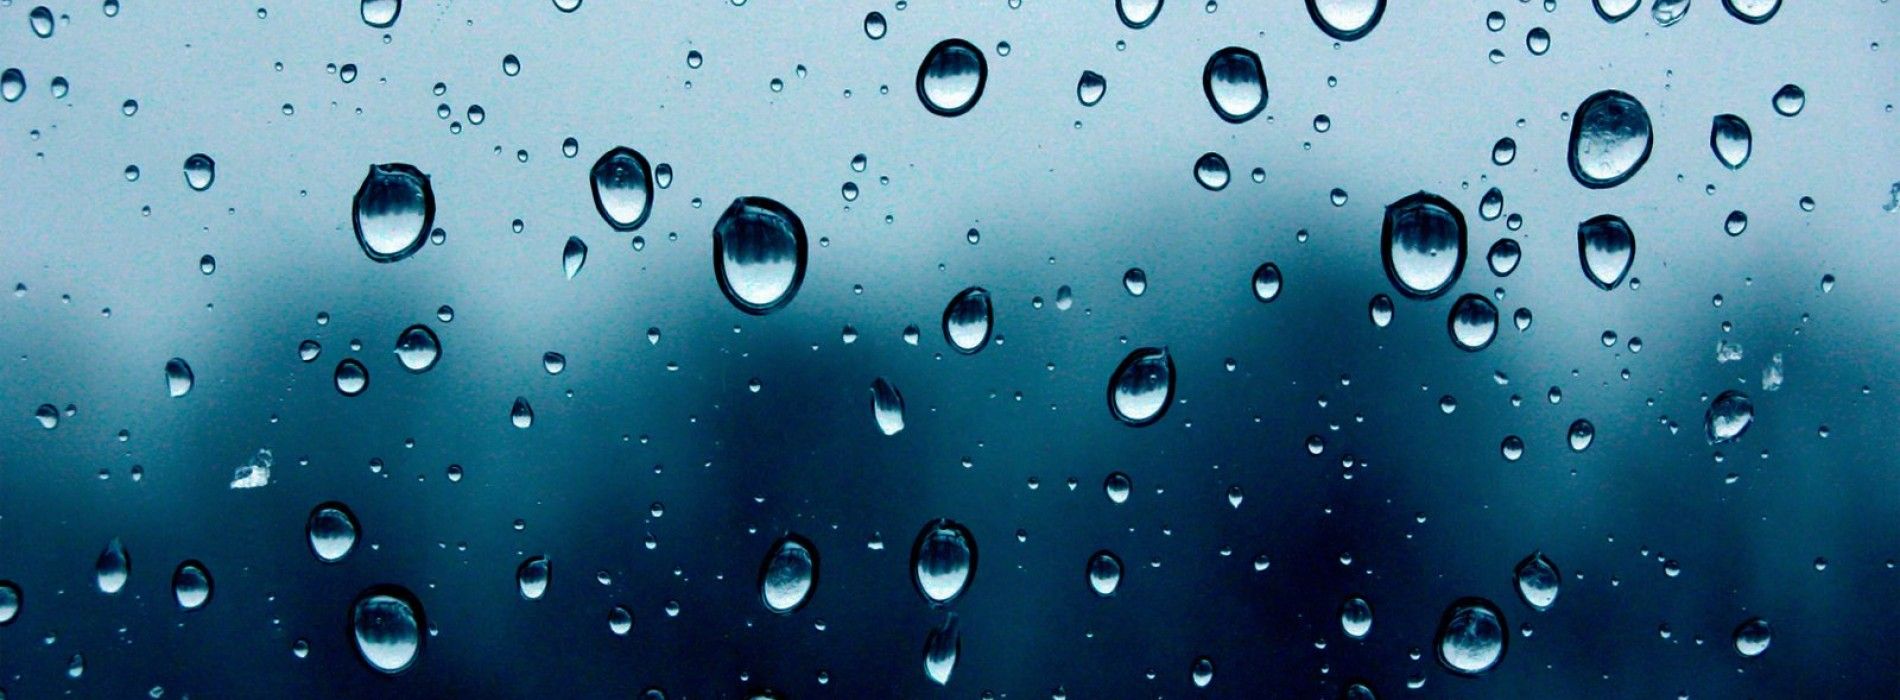 water-drops-hd-wallpaper-download-water-images-free-1900x700_c.jpg